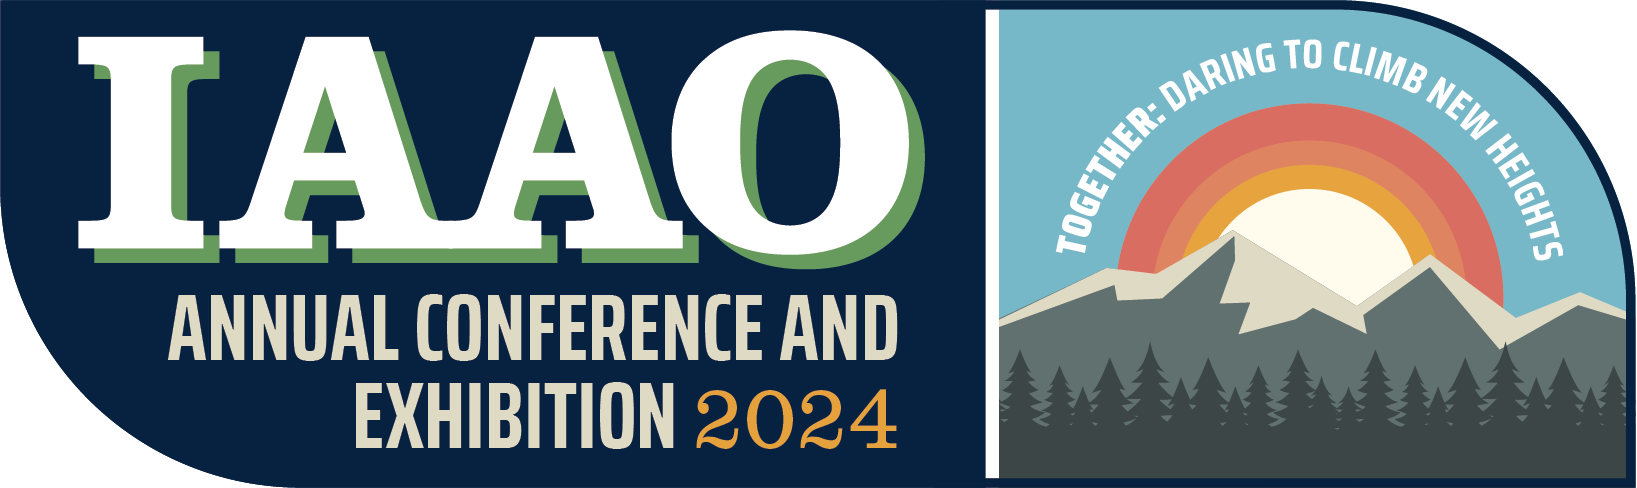 IAAO Annual Conference Exhibitor Showcase 2024